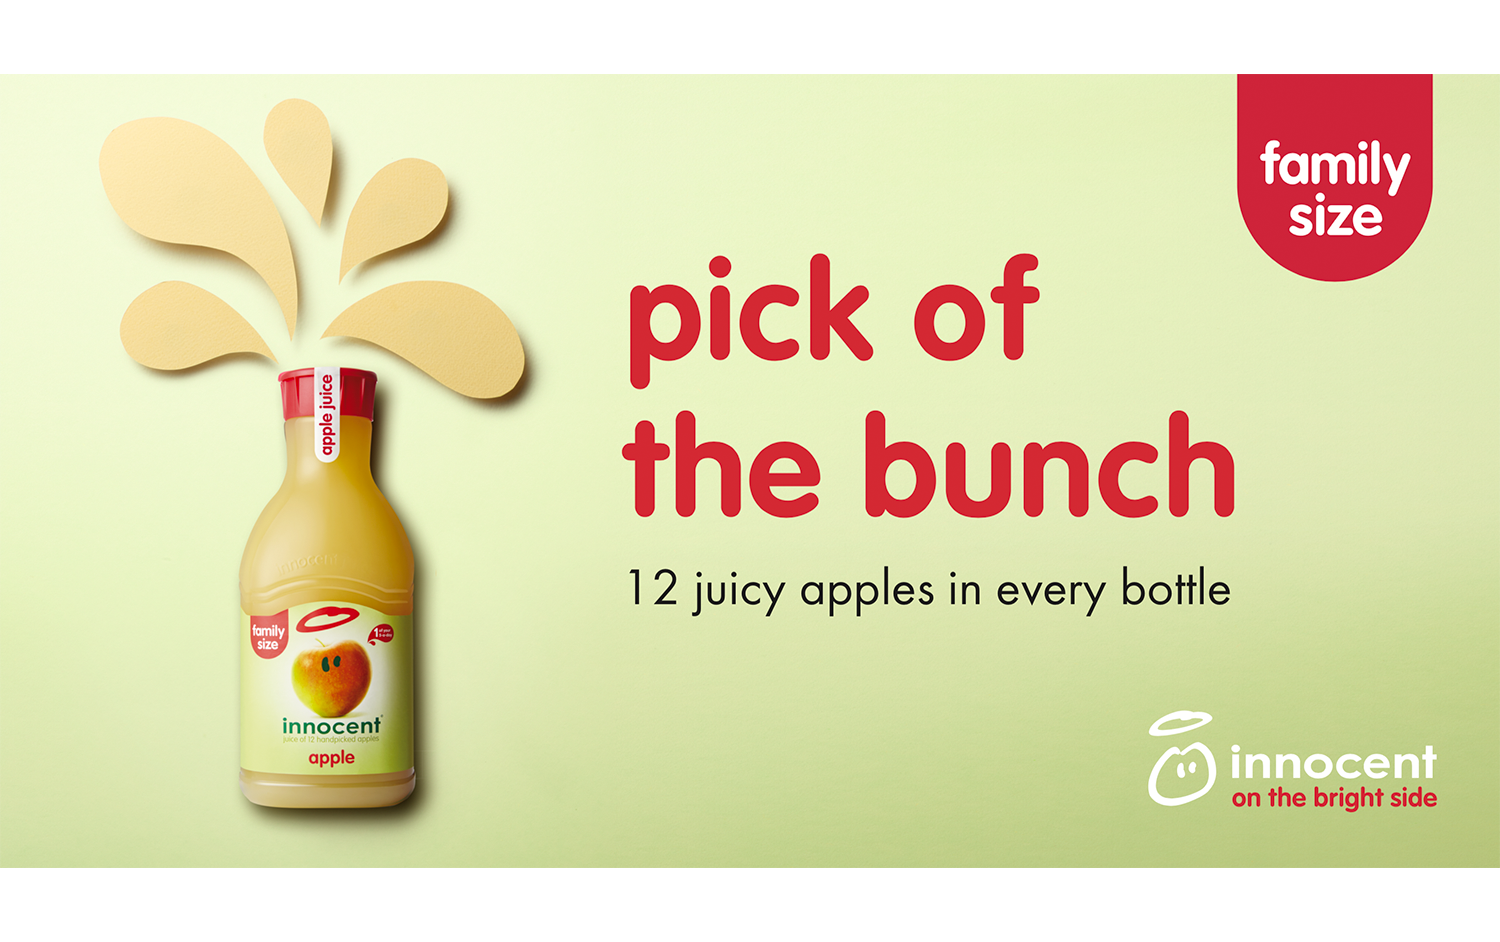 an advert for innocent apple juice